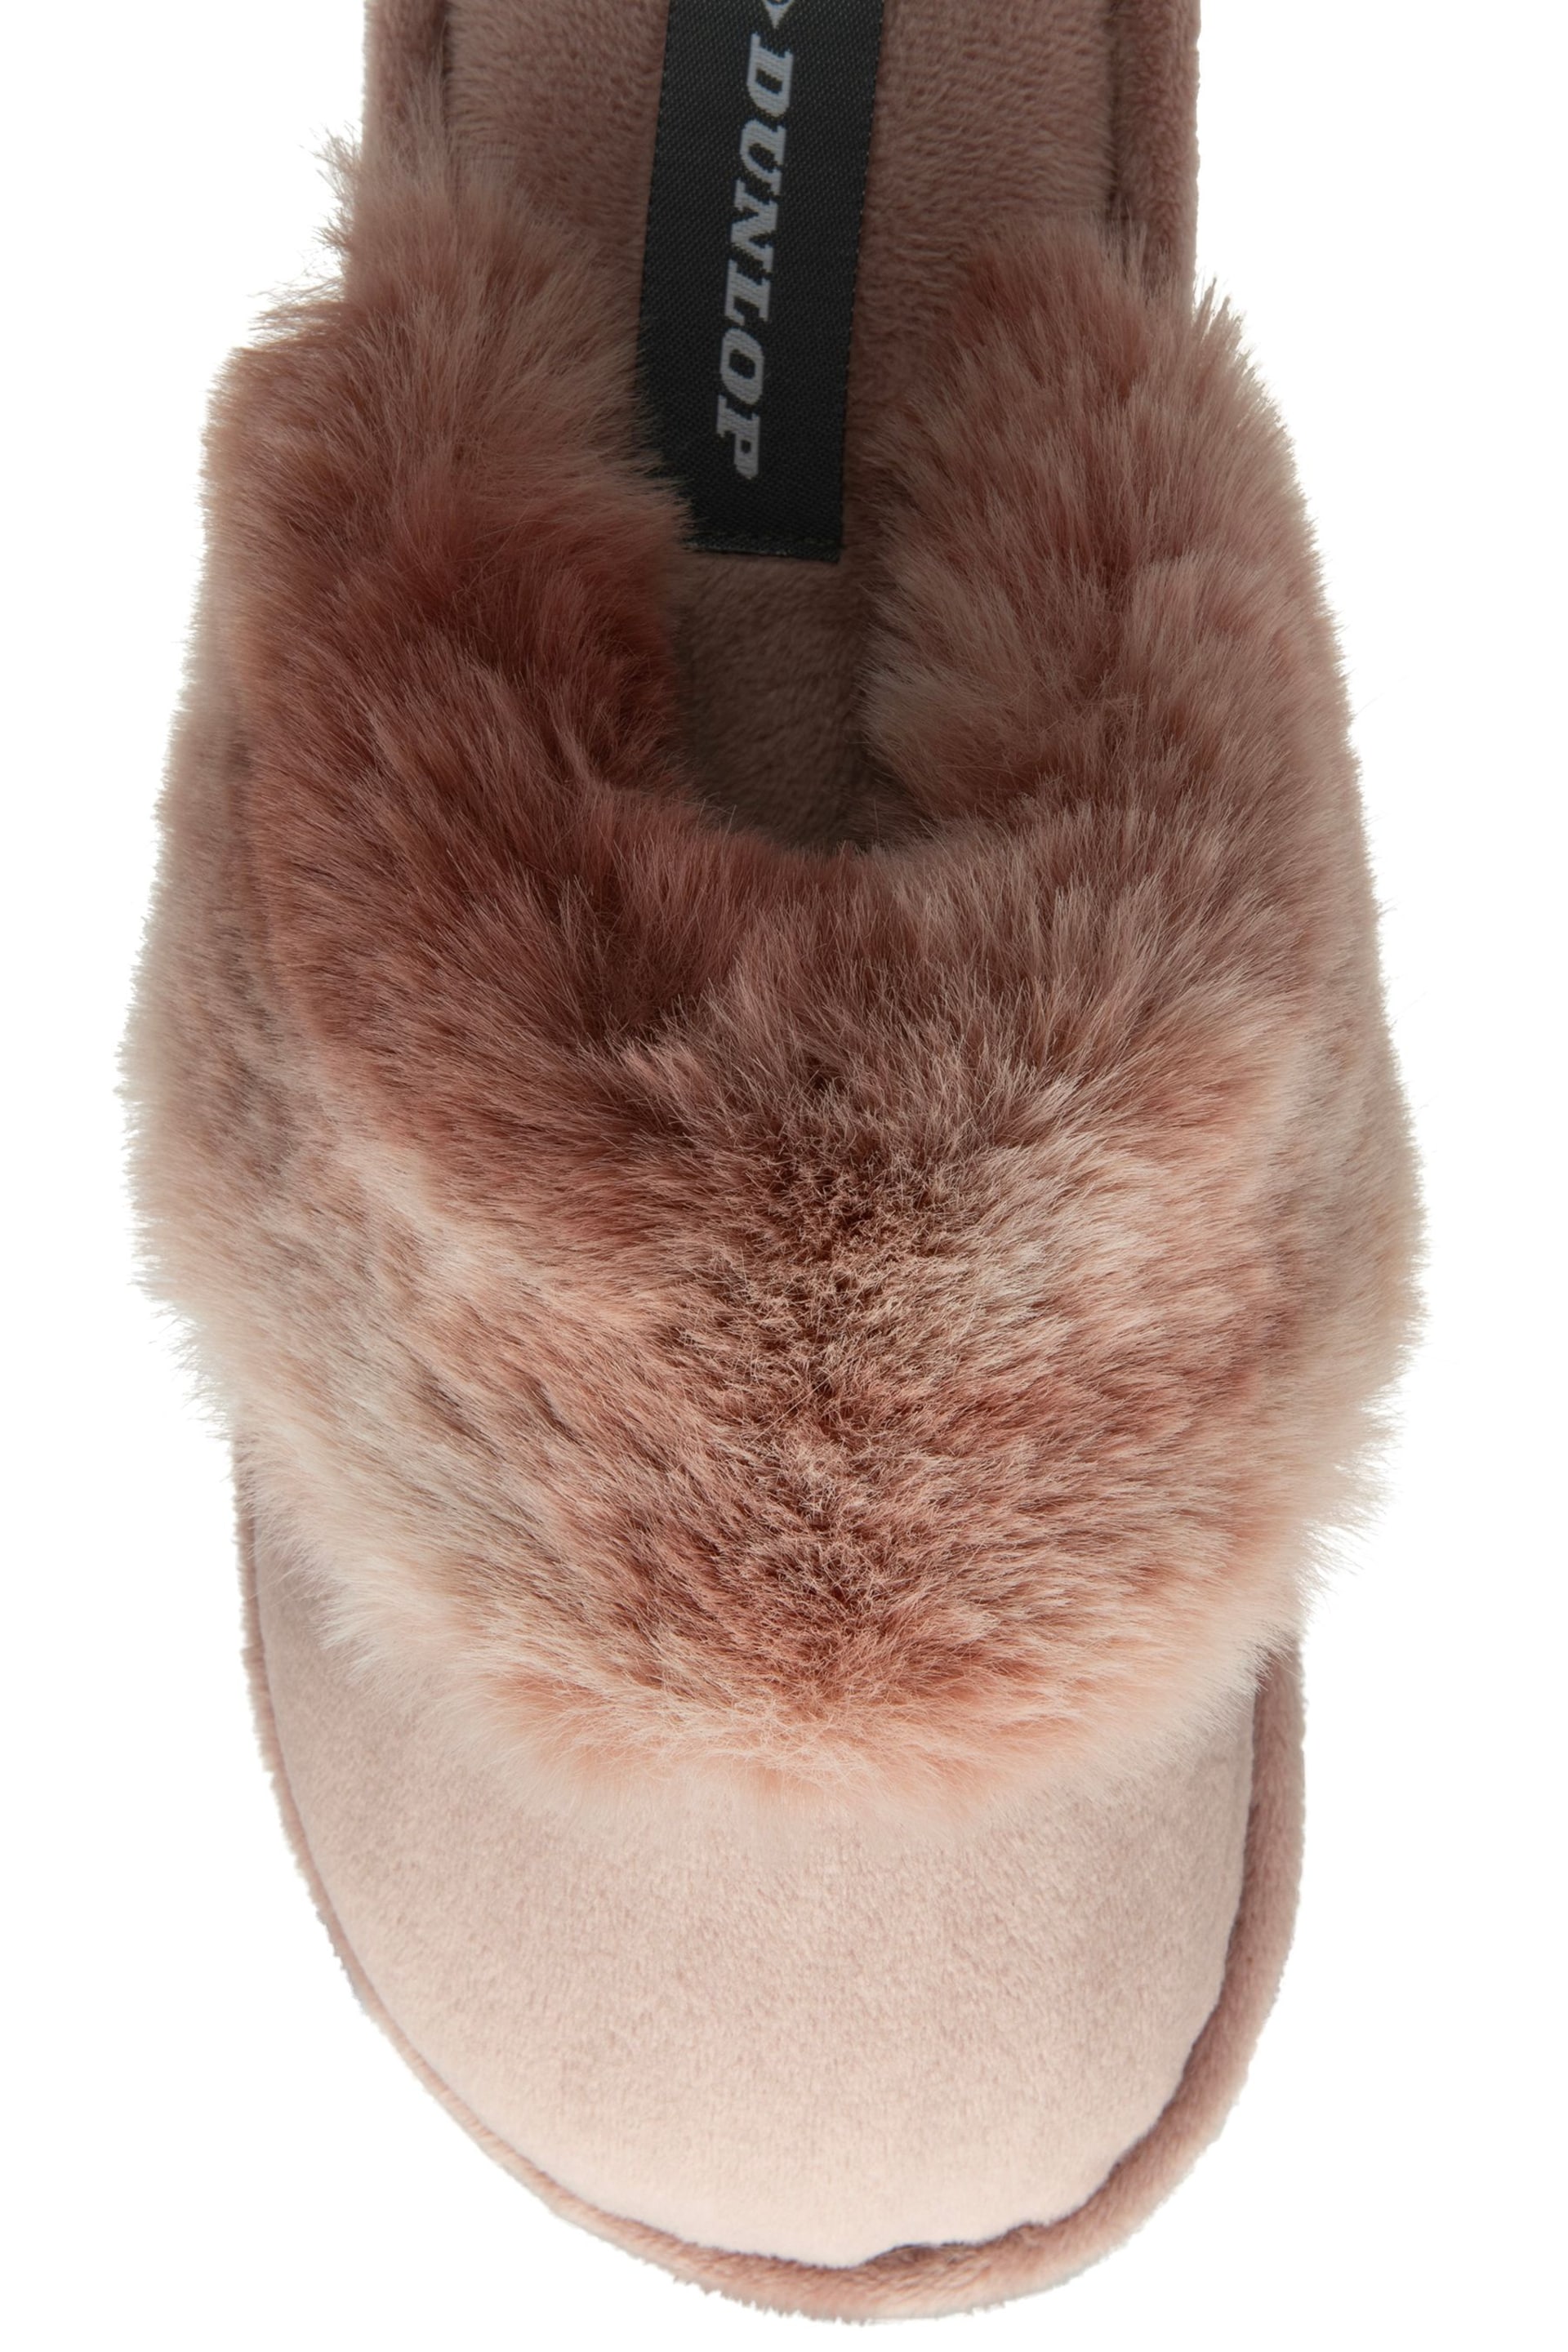 Dunlop Pink Ladies Closed Toe Faux Fur Mule Slippers - Image 4 of 4